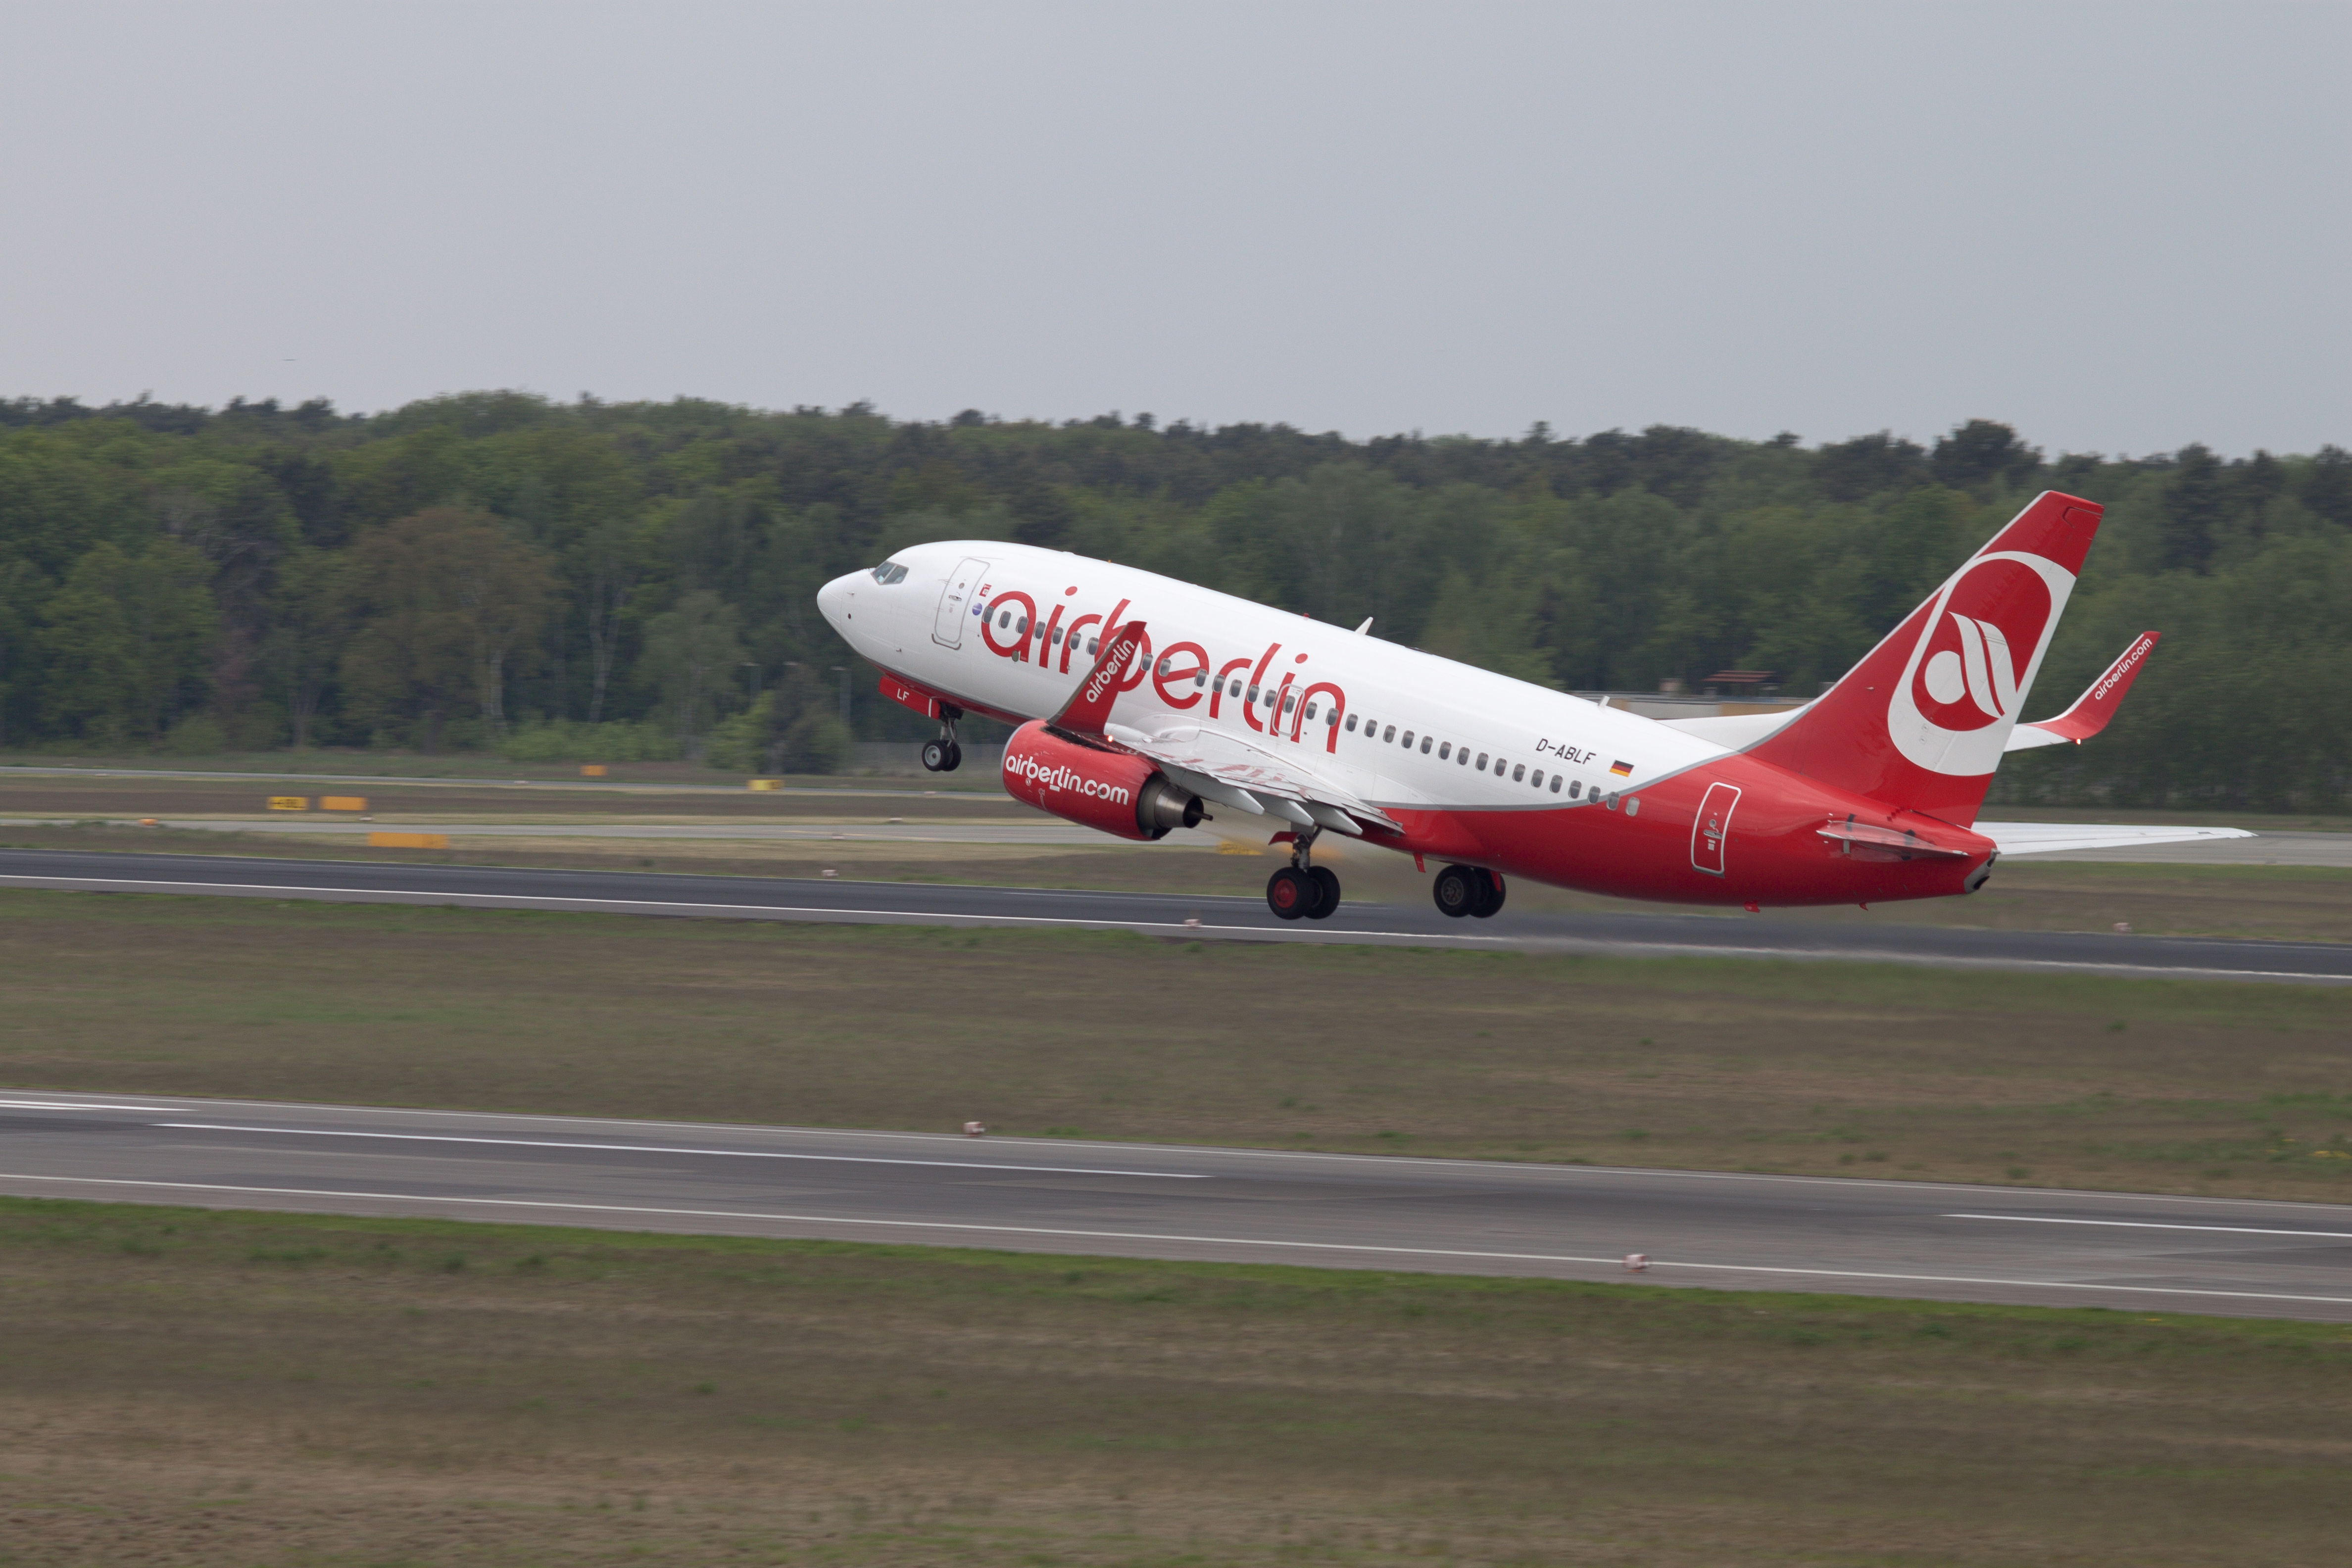 File:Air Berlin Boeing-737 taking-off 02.jpg - Wikimedia Commons